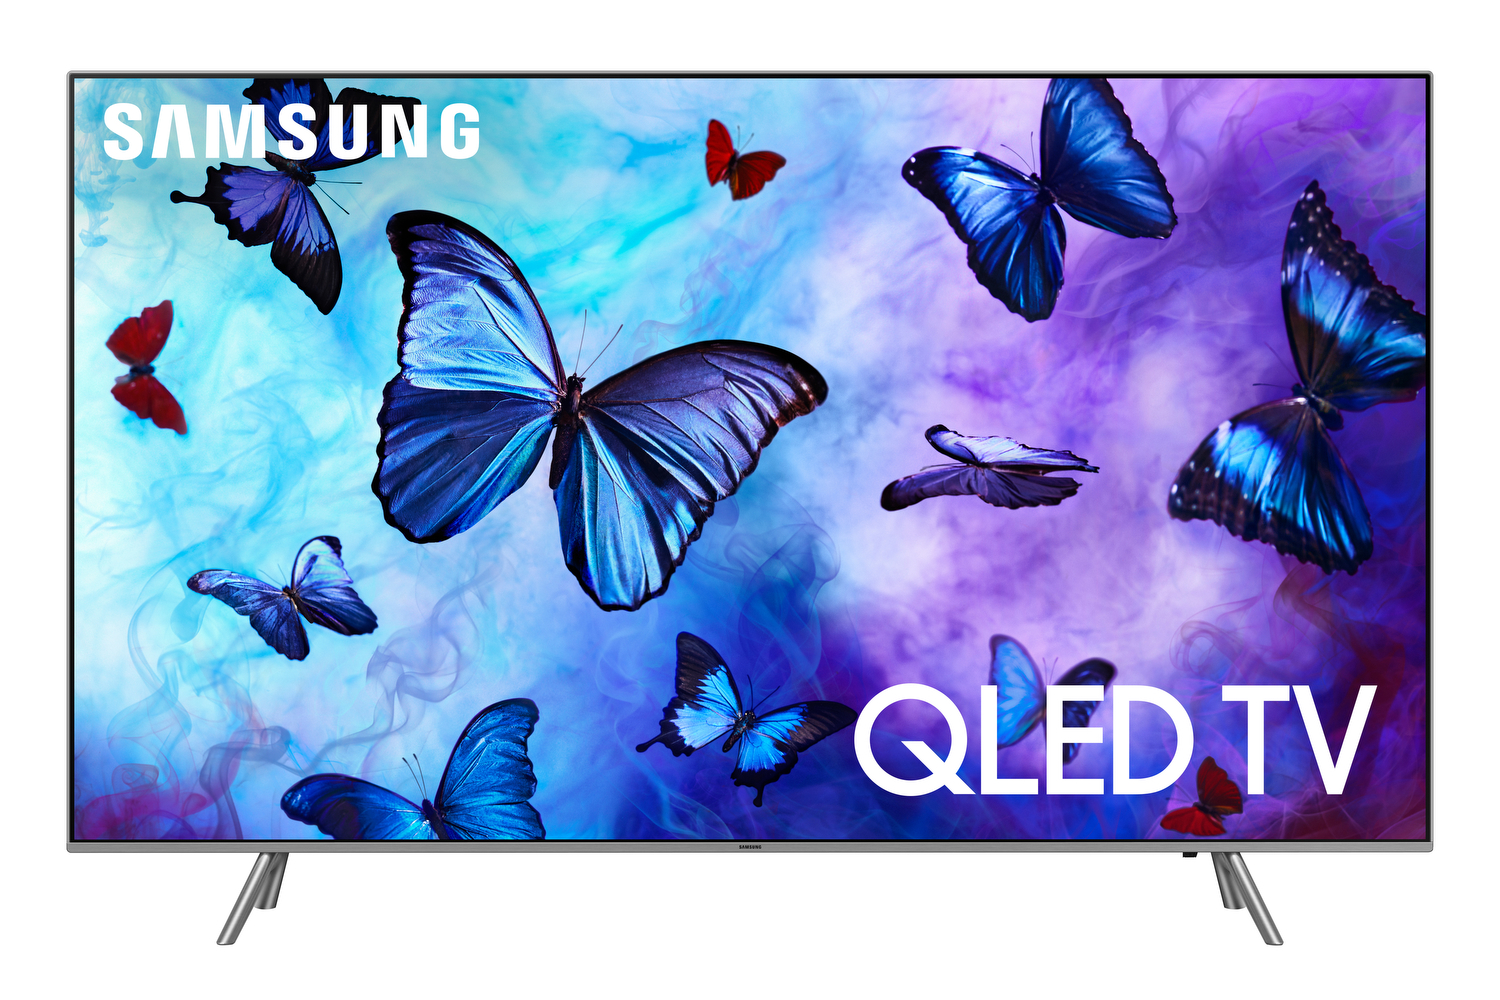 Samsung 2018 QLED TV Lineup | Q6FN Model